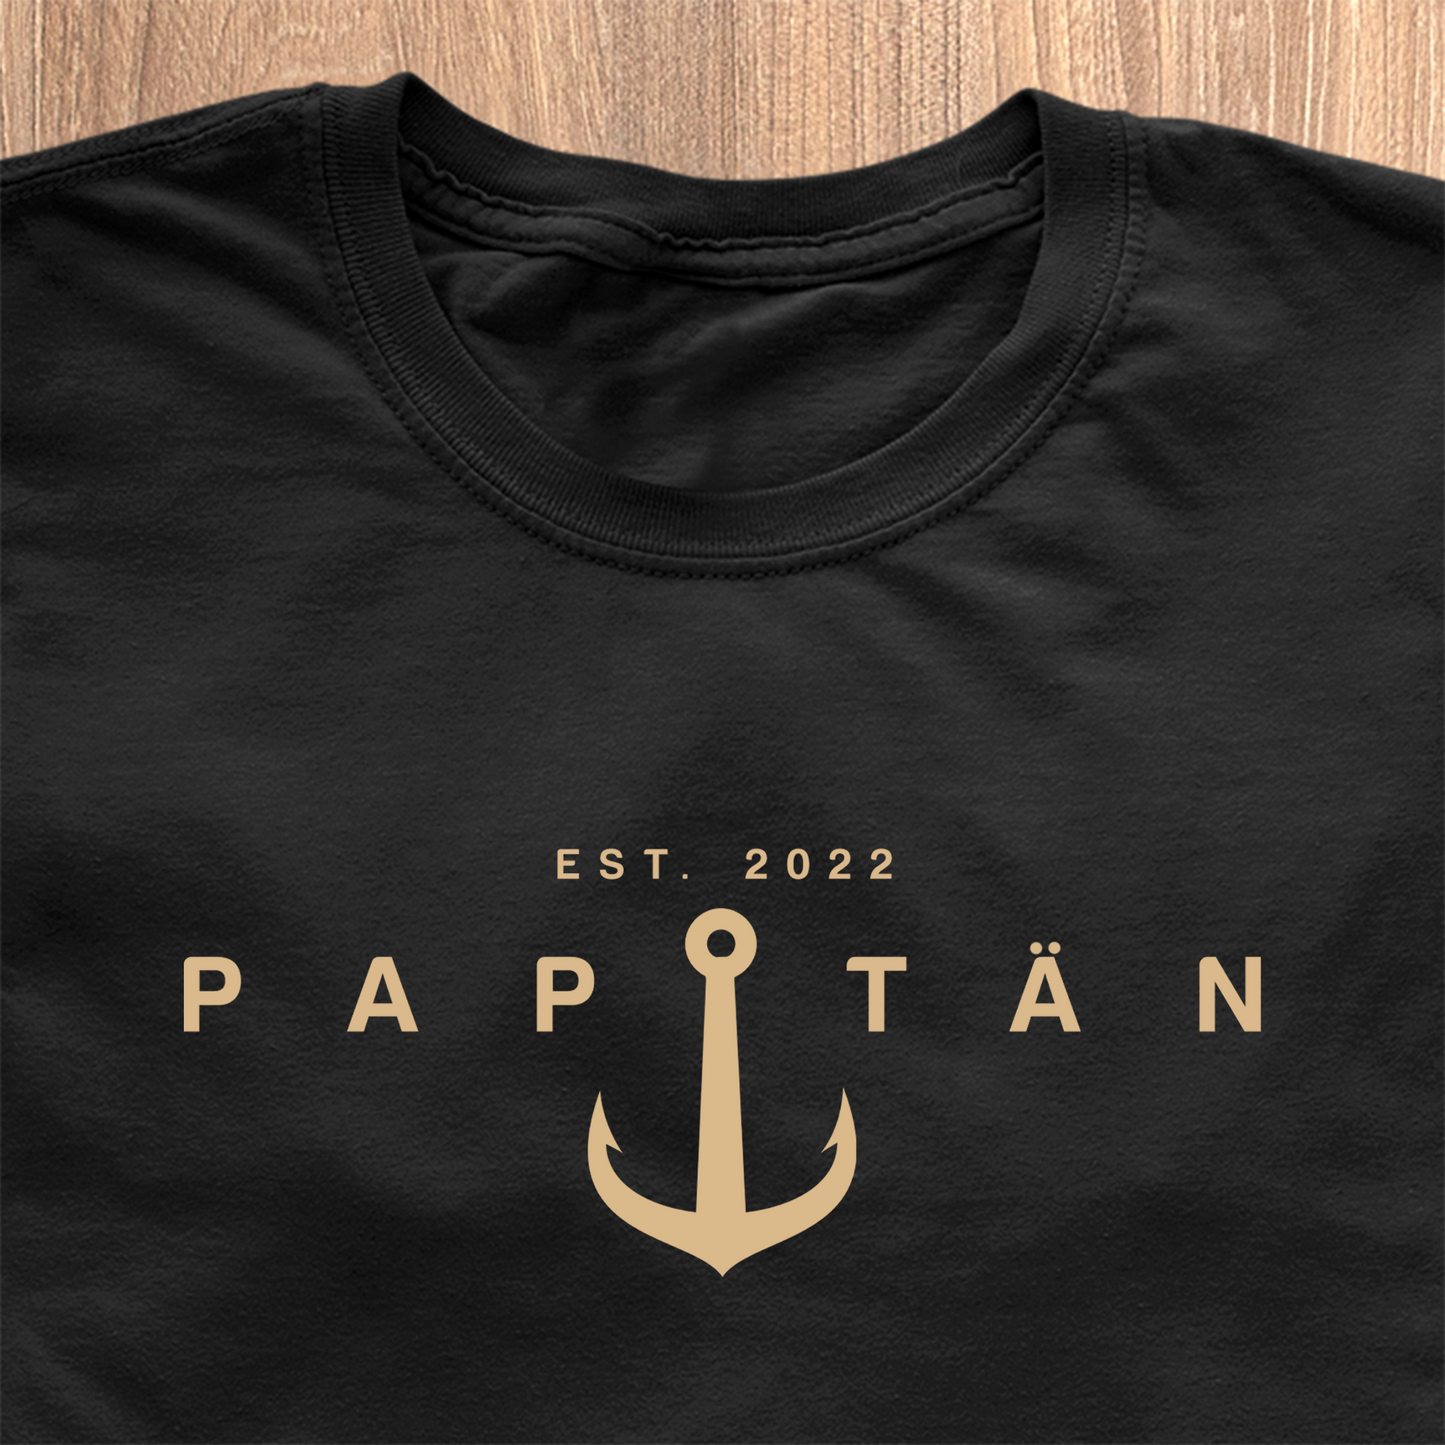 Papitän Modern Edition T-Shirt - Datum personalisierbar